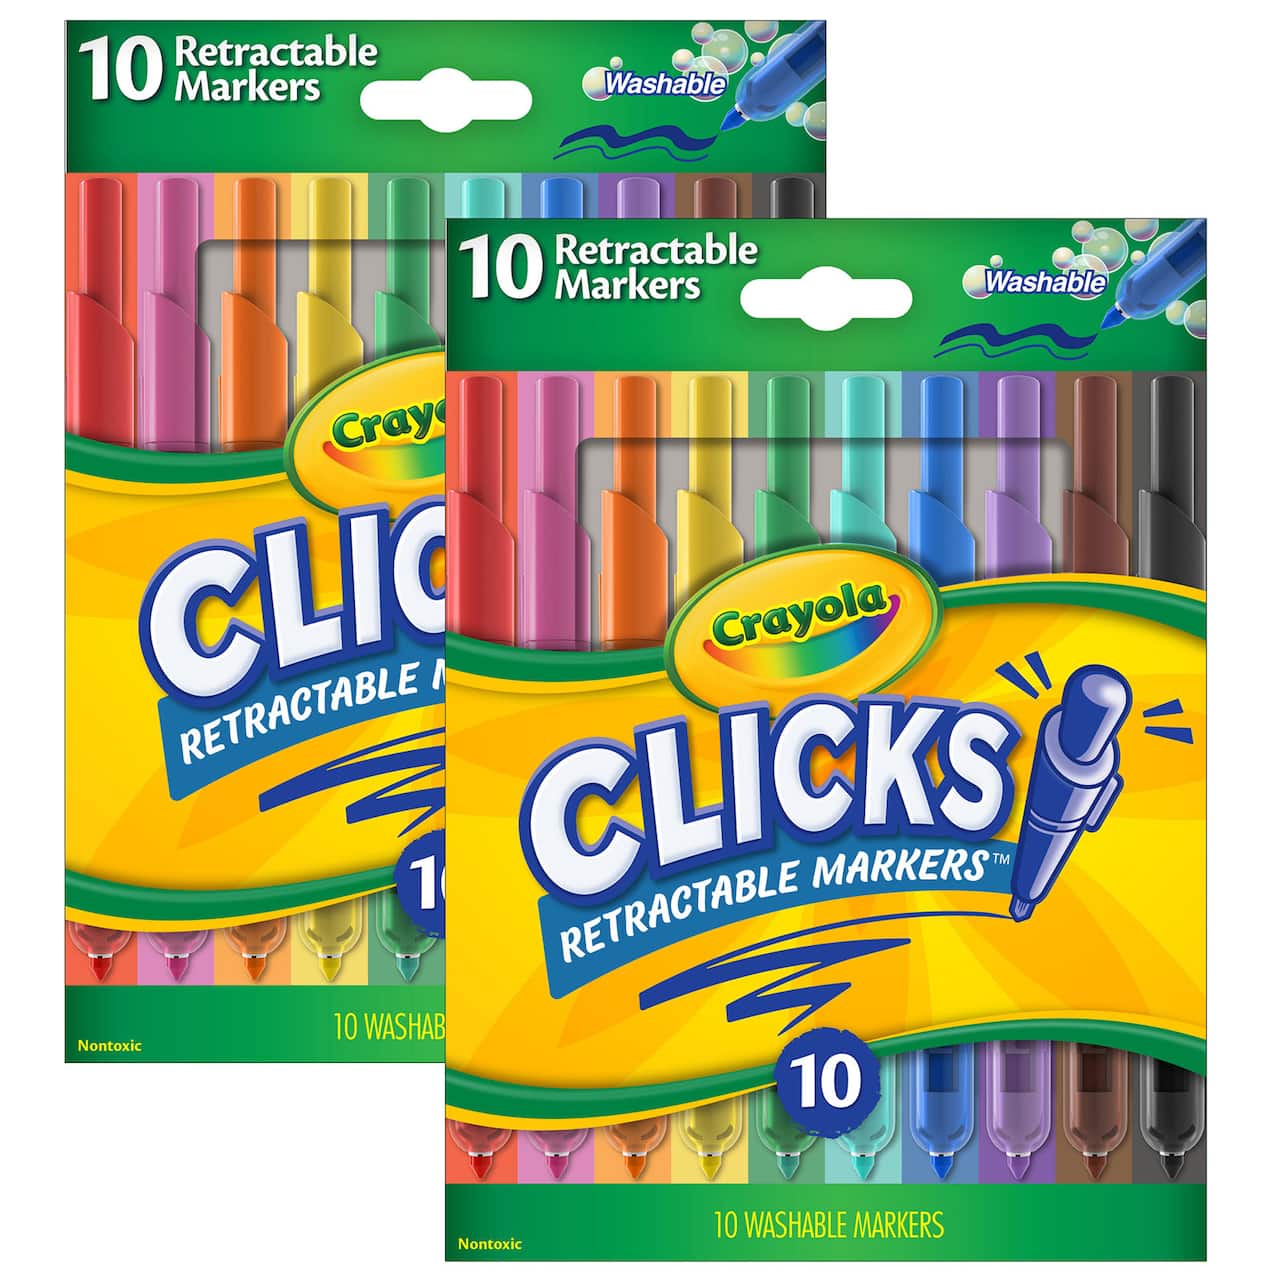 Crayola® CLICKS Retractable Markers™, 2 Packs of 10